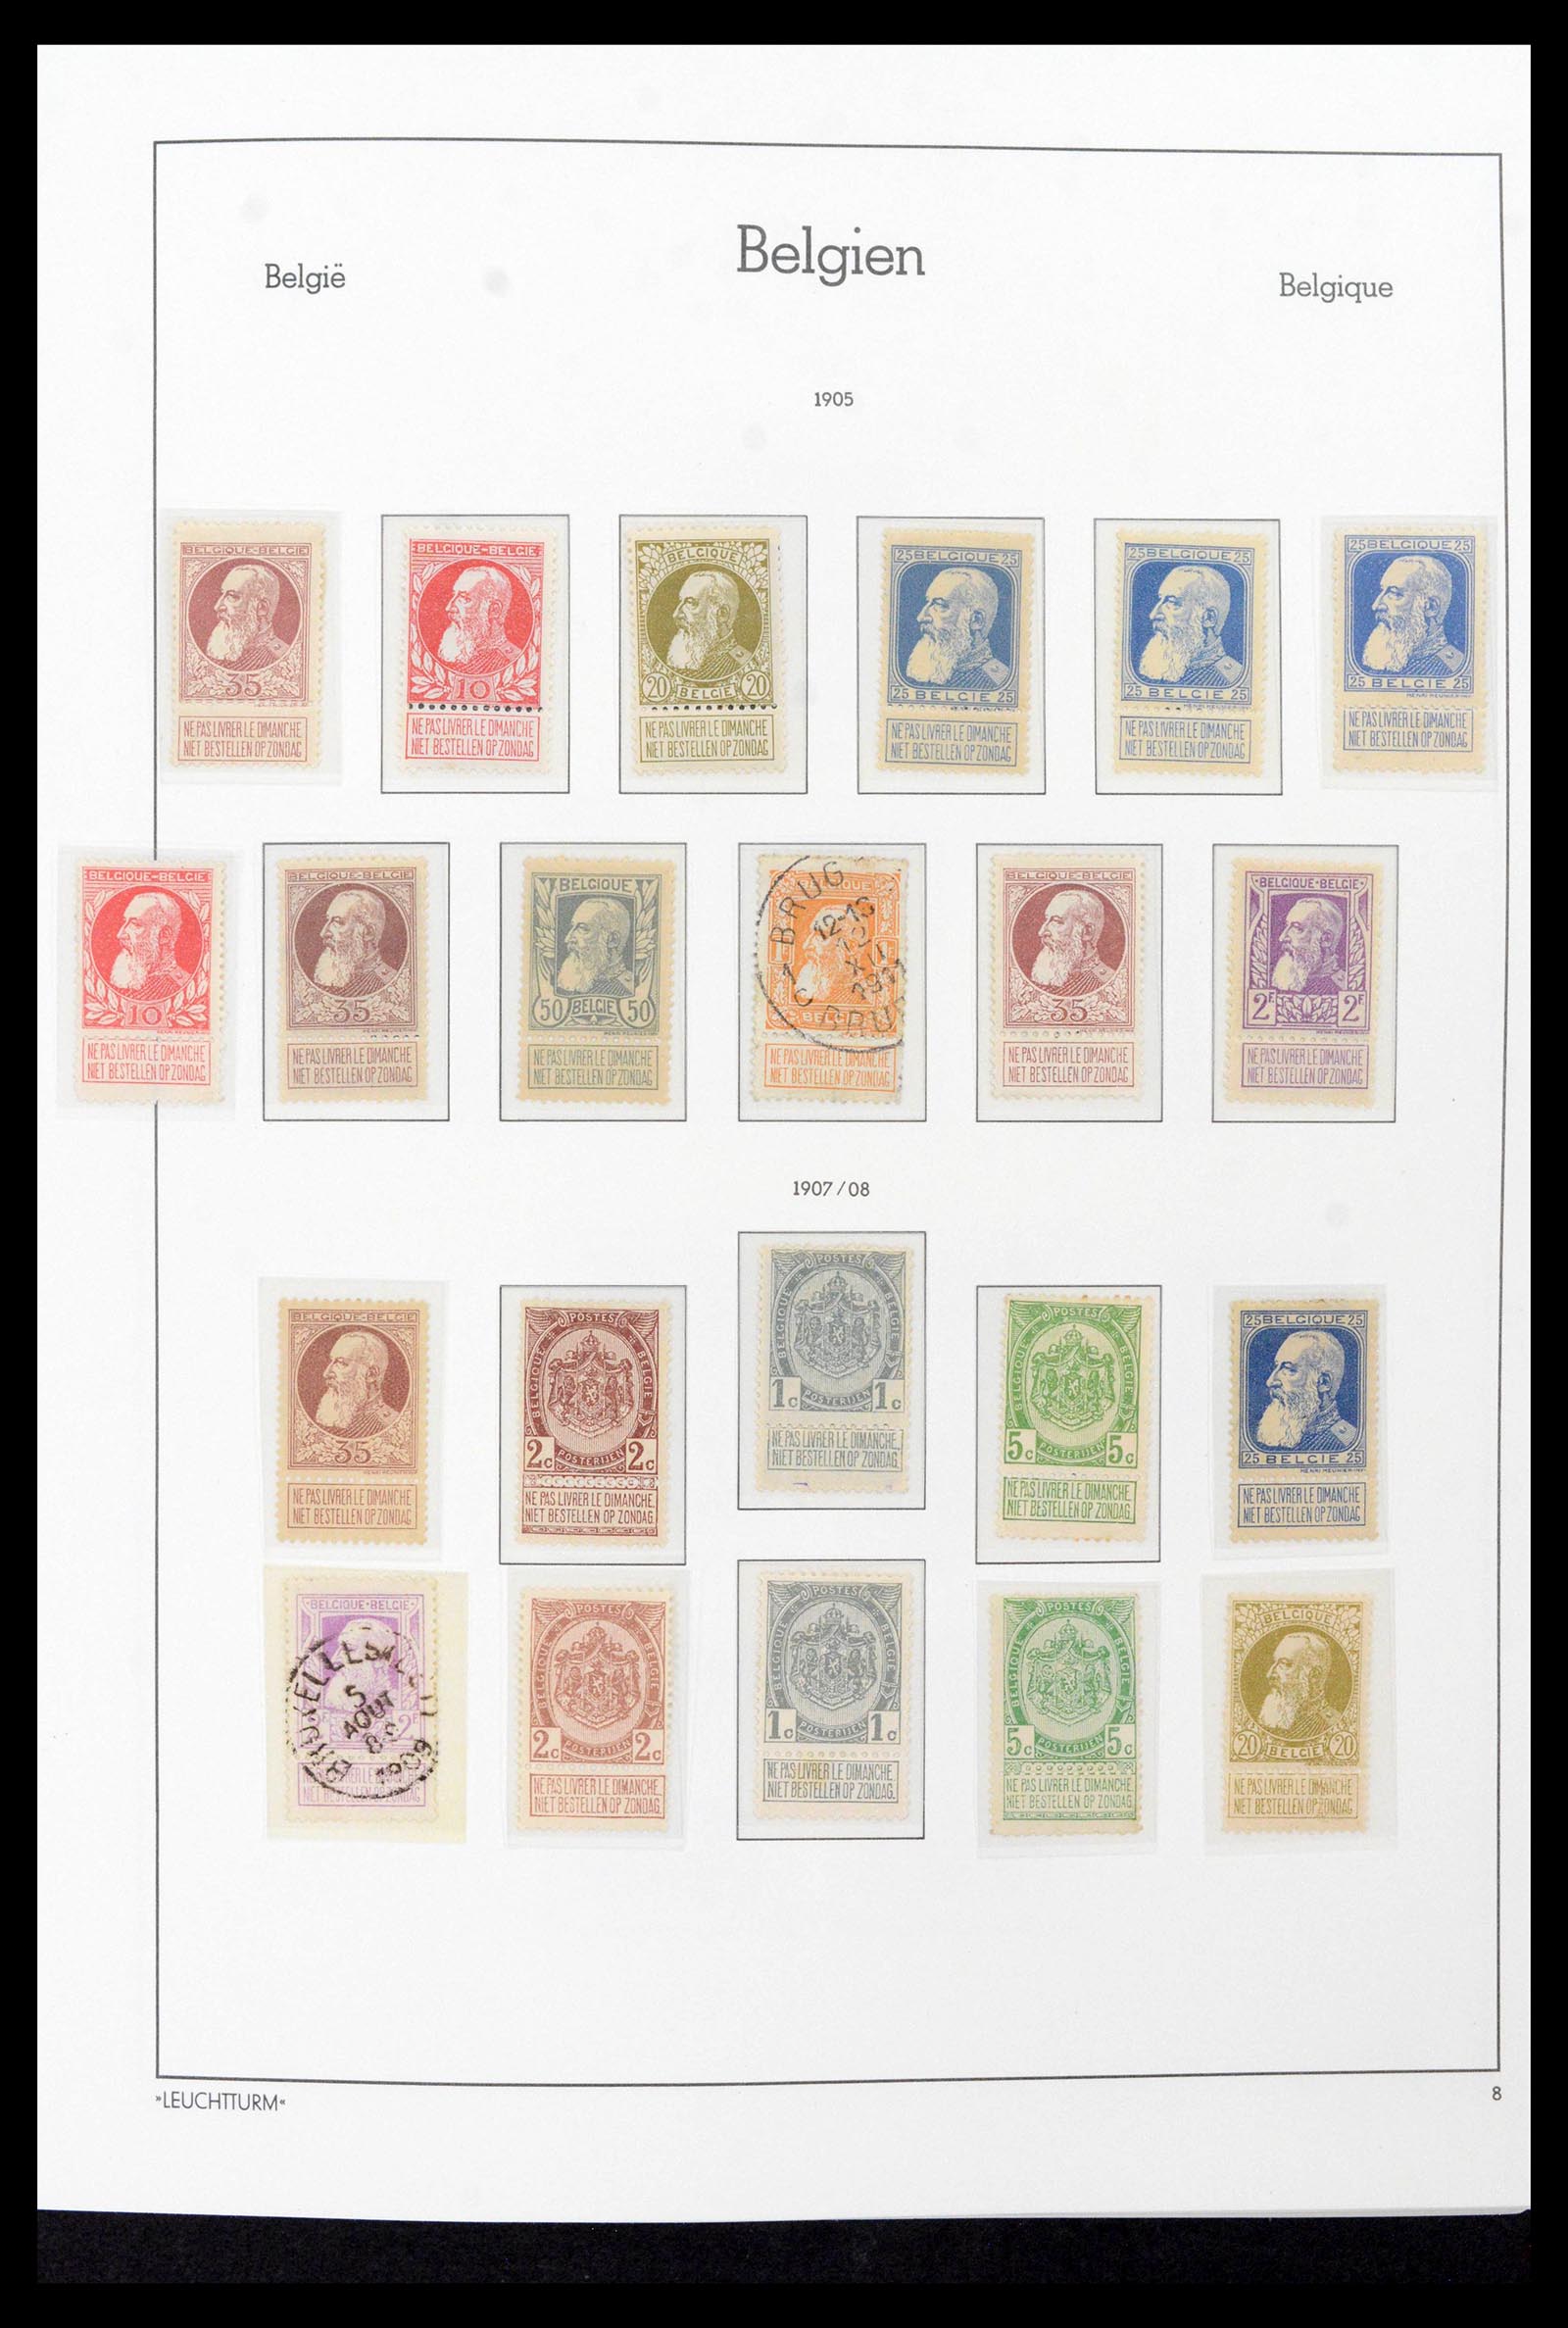 39137 0013 - Stamp collection 39137 Belgium 1849-2002.